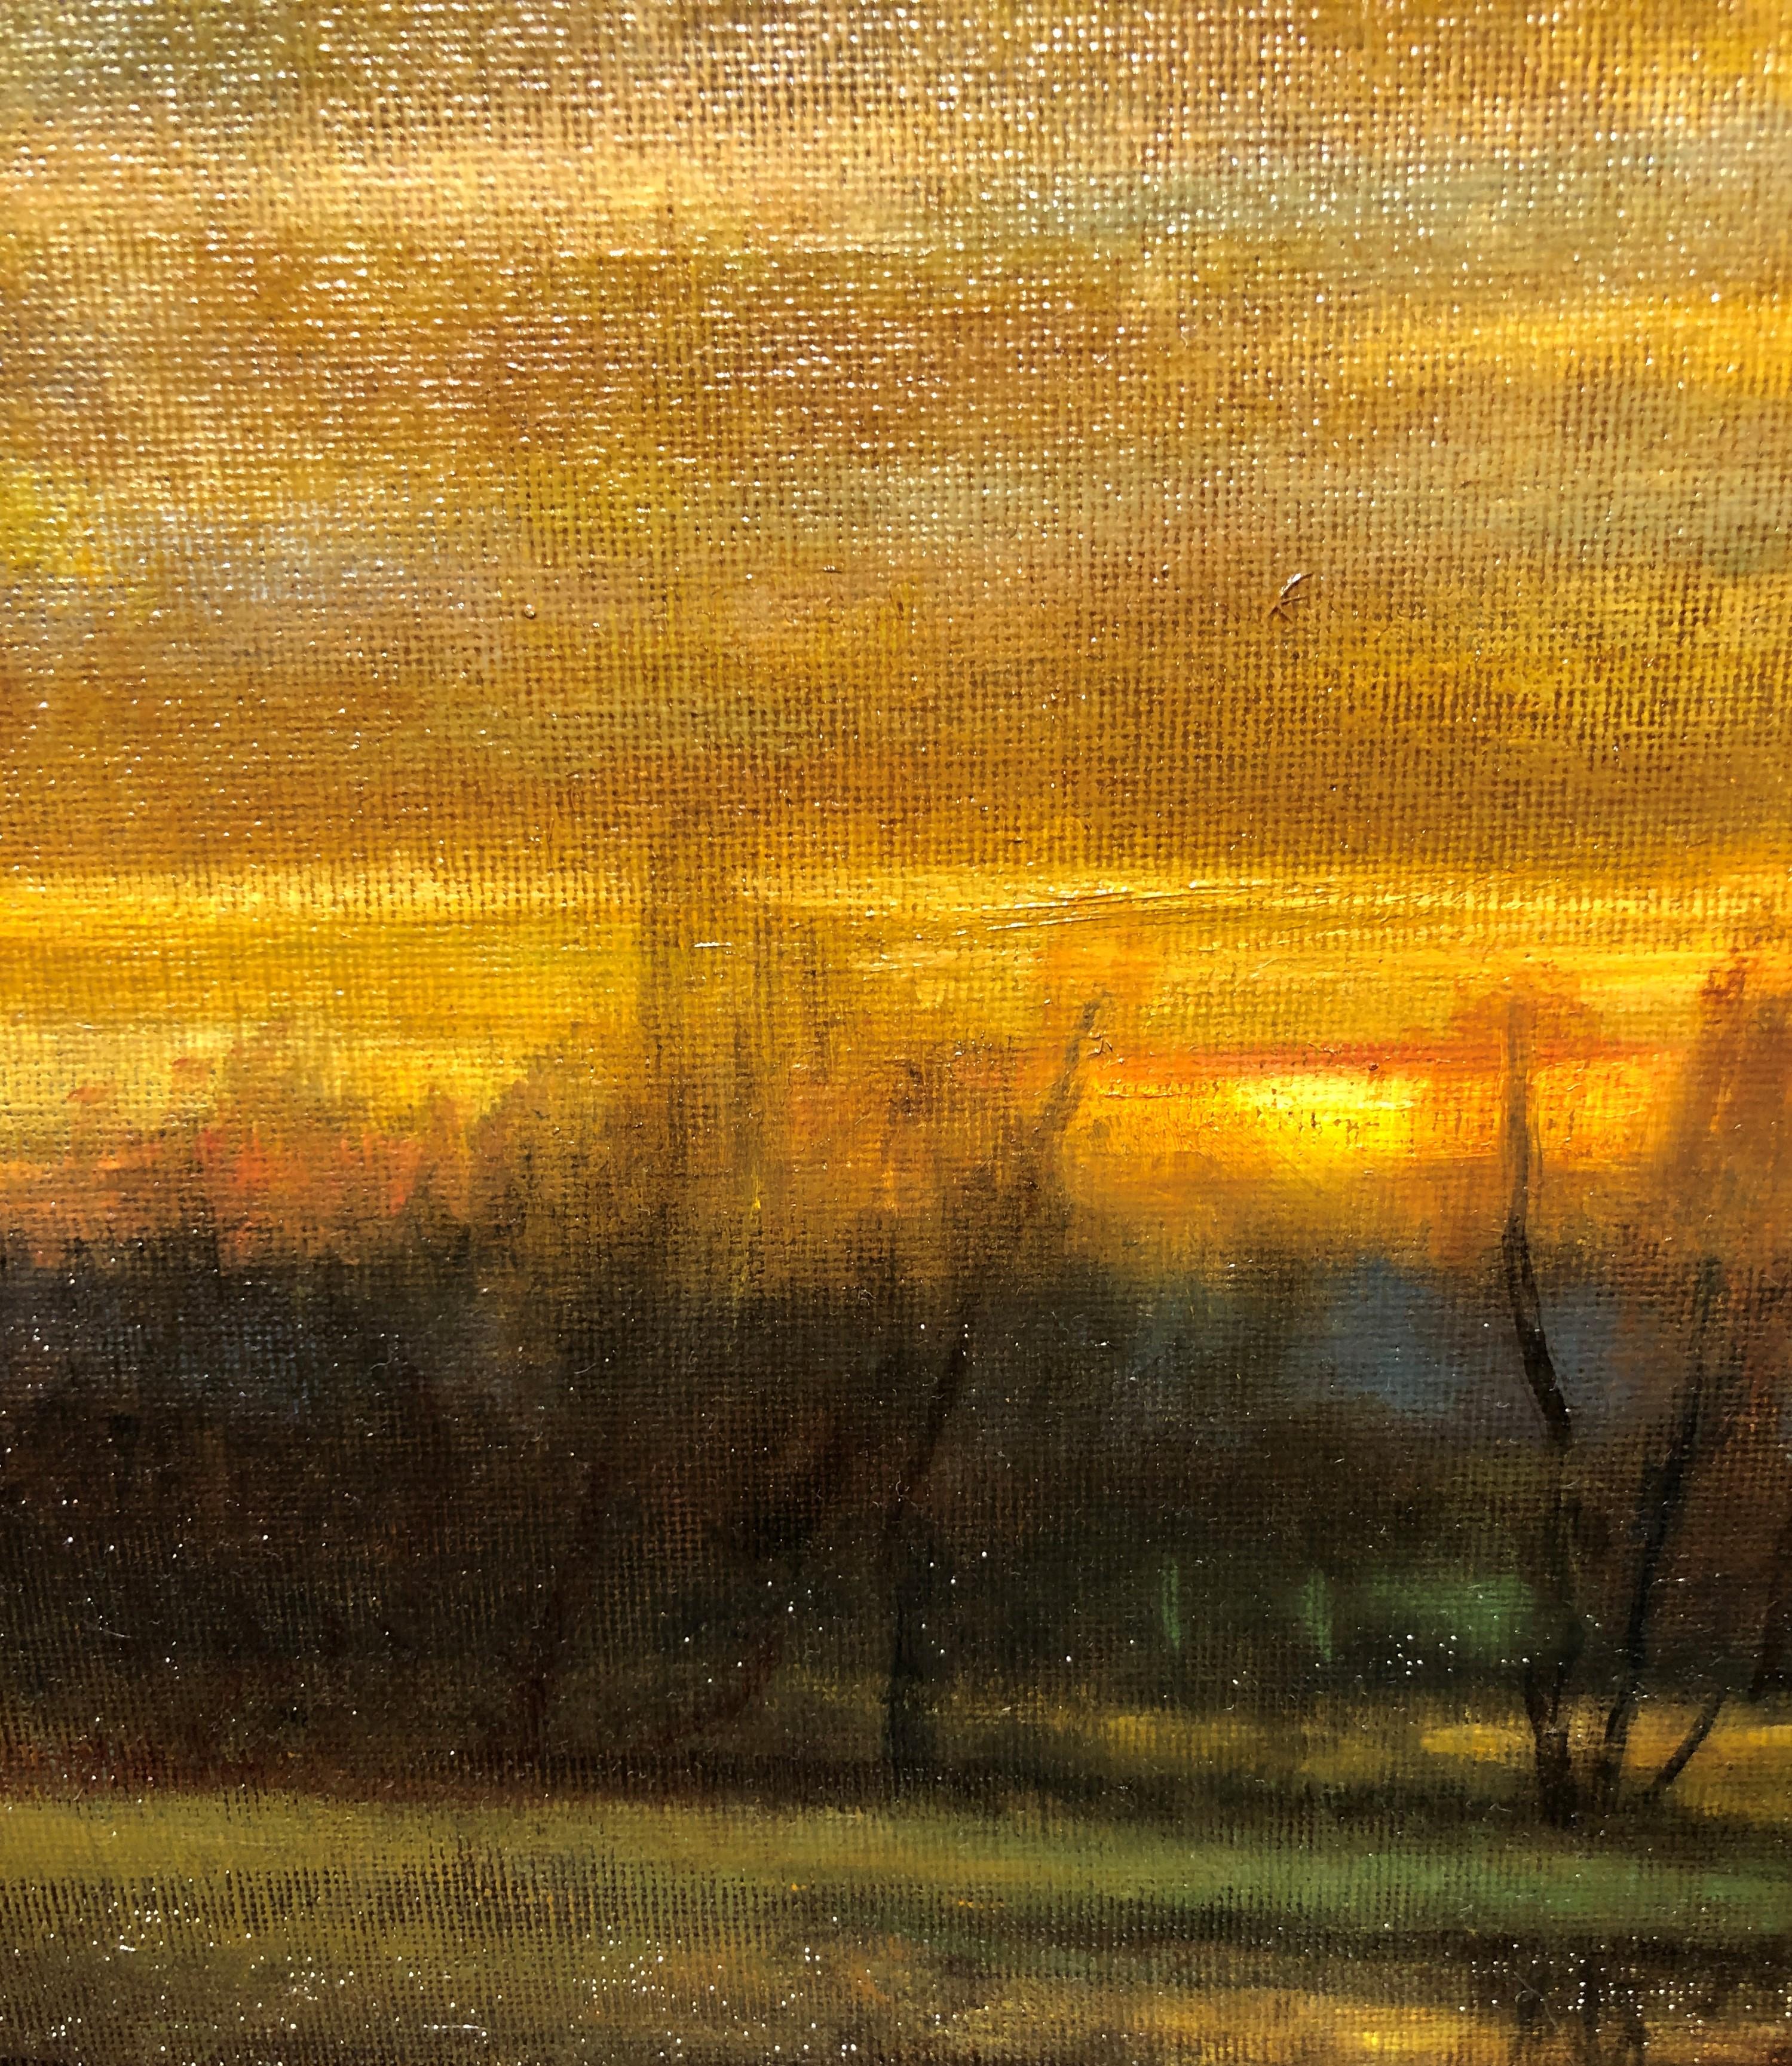 Burning Desire - Original Oil Painting, Soft Light Reflecting Romantic Colors 9